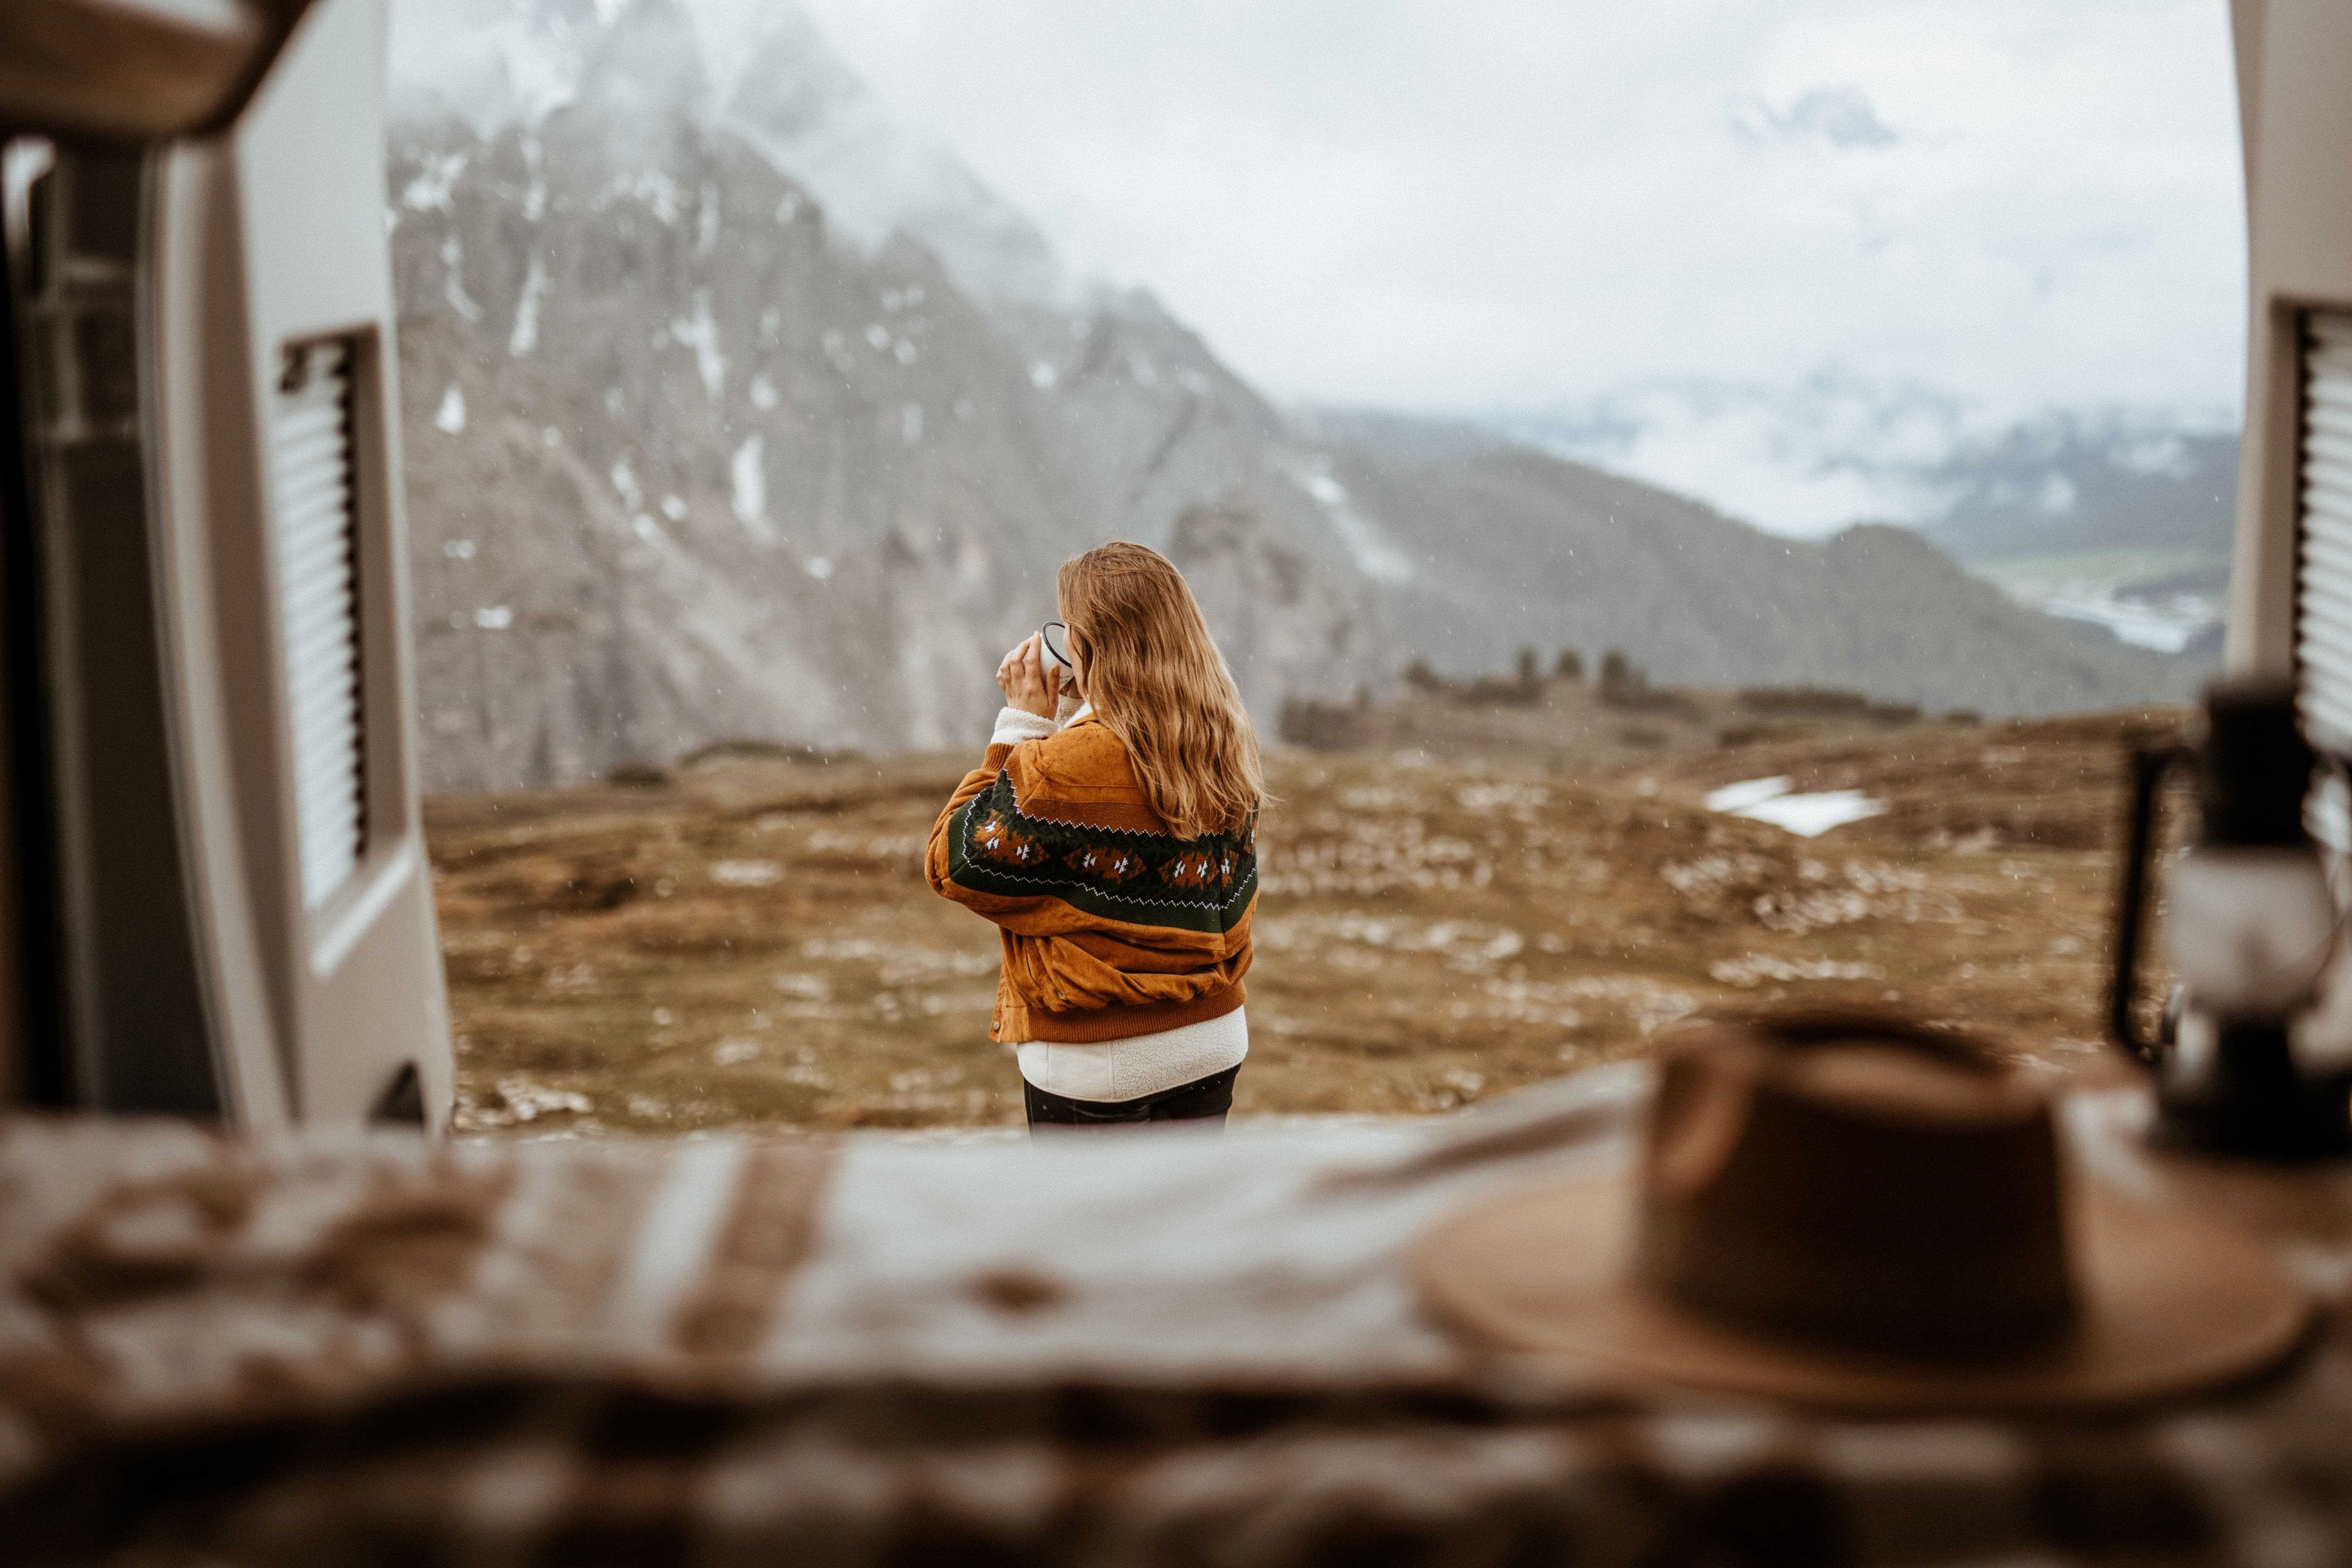 una ragazza che viaggia in solitaria beve una tazza di caffè davanti al camper